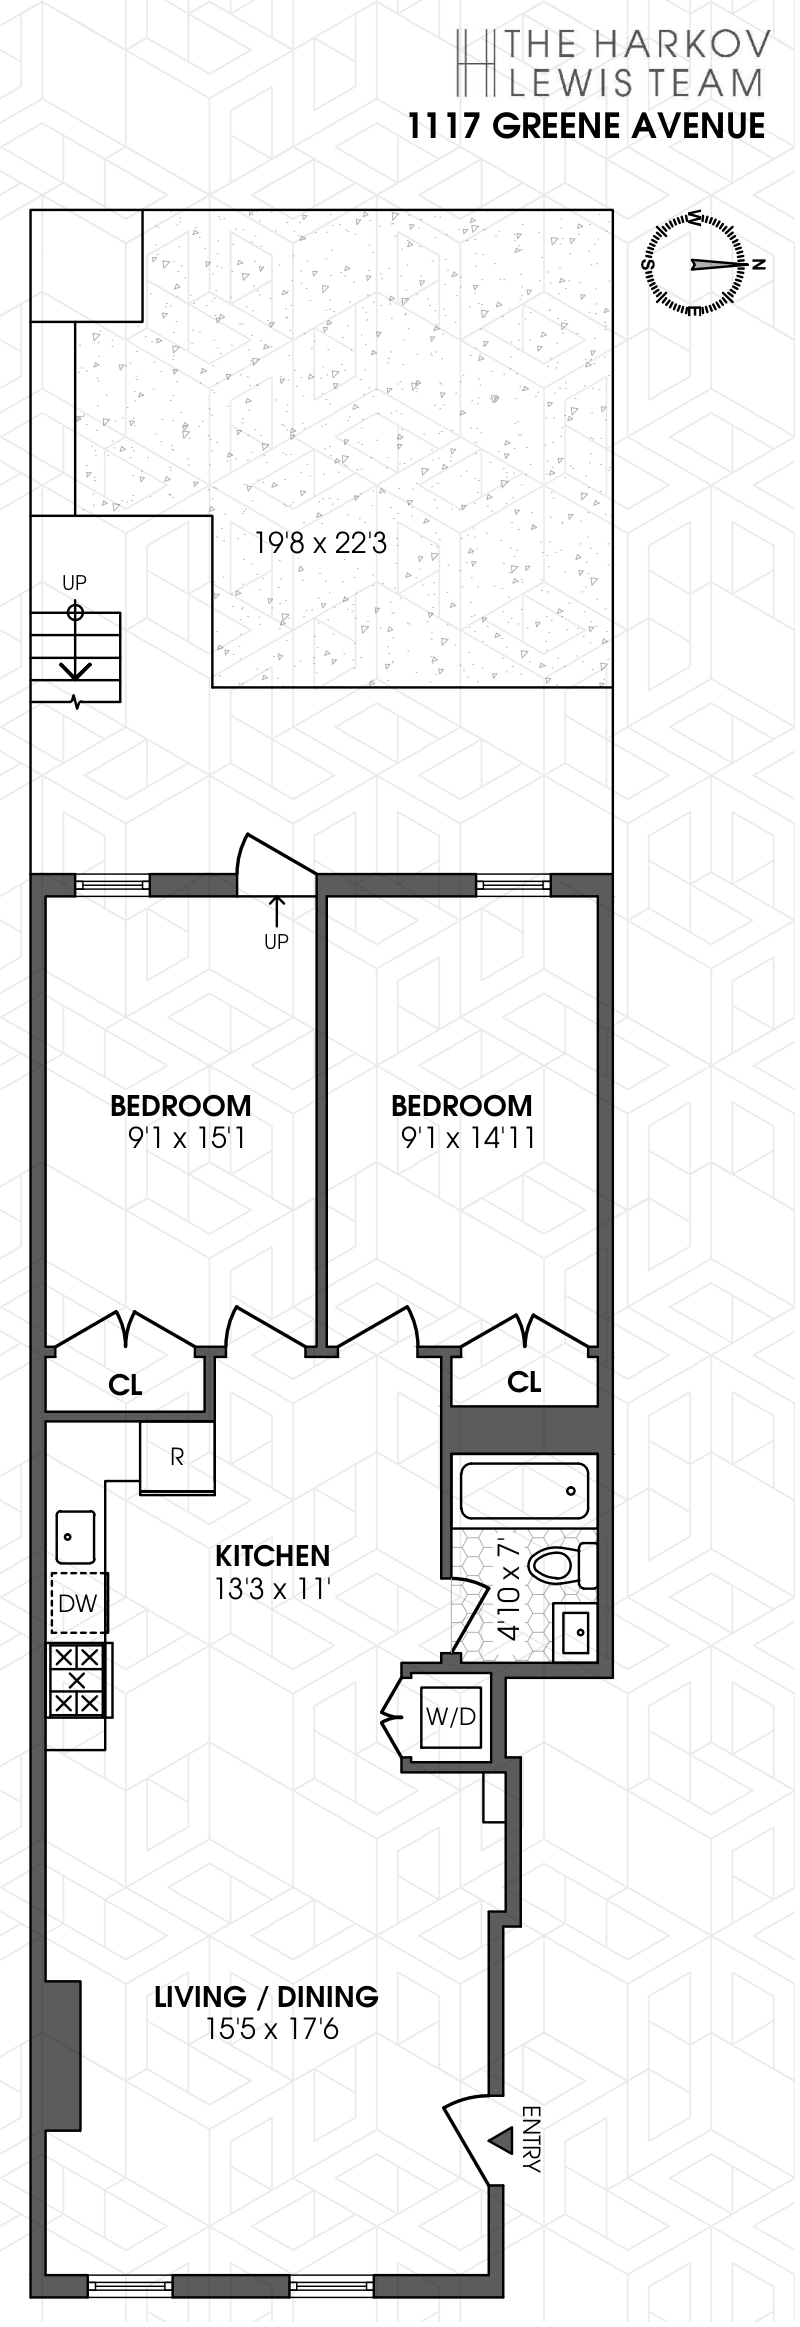 Floorplan for 1117 Greene Avenue